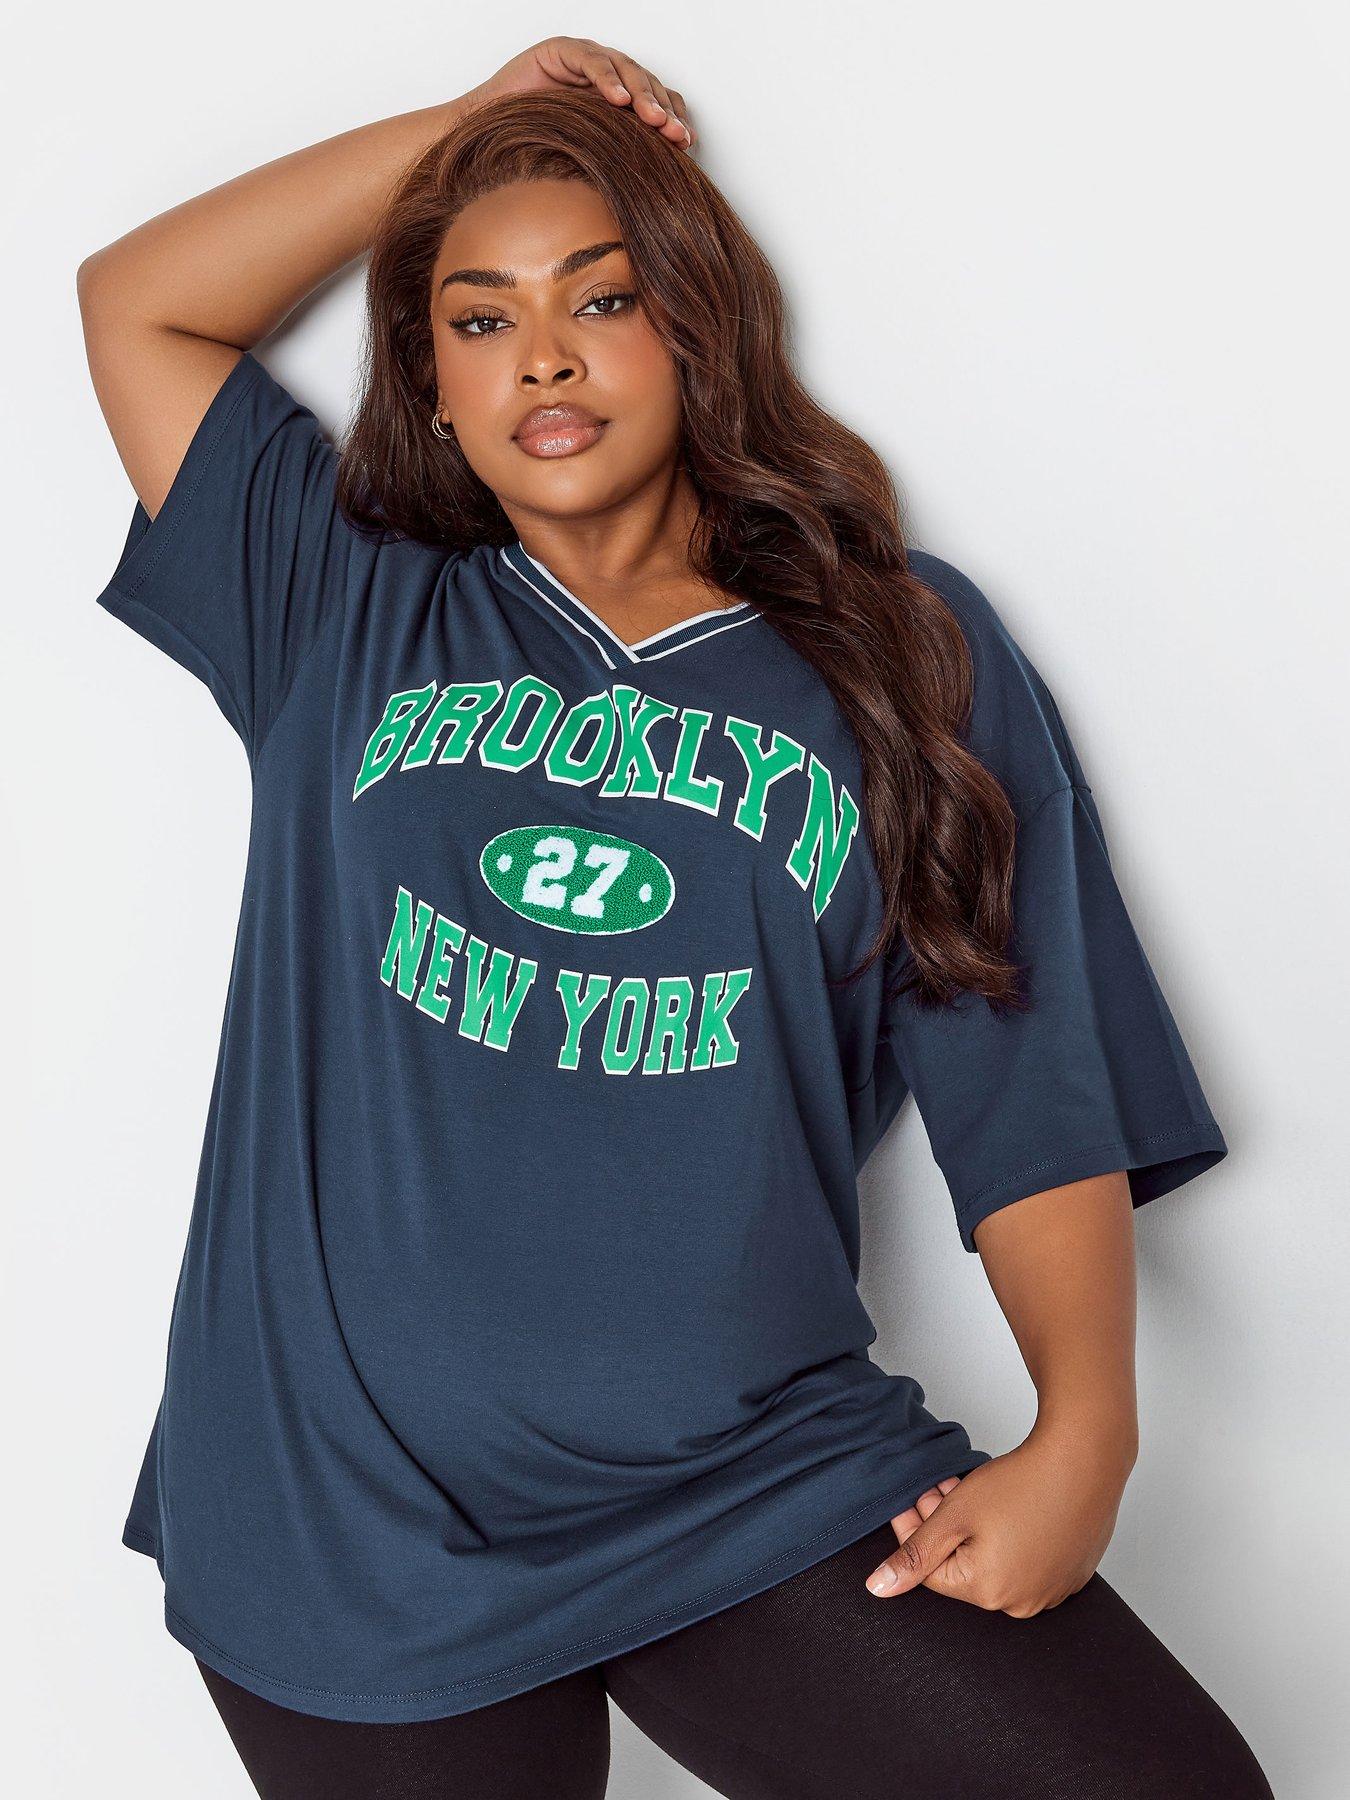 47 Men's New York Yankees Navy Westend Henley T-Shirt